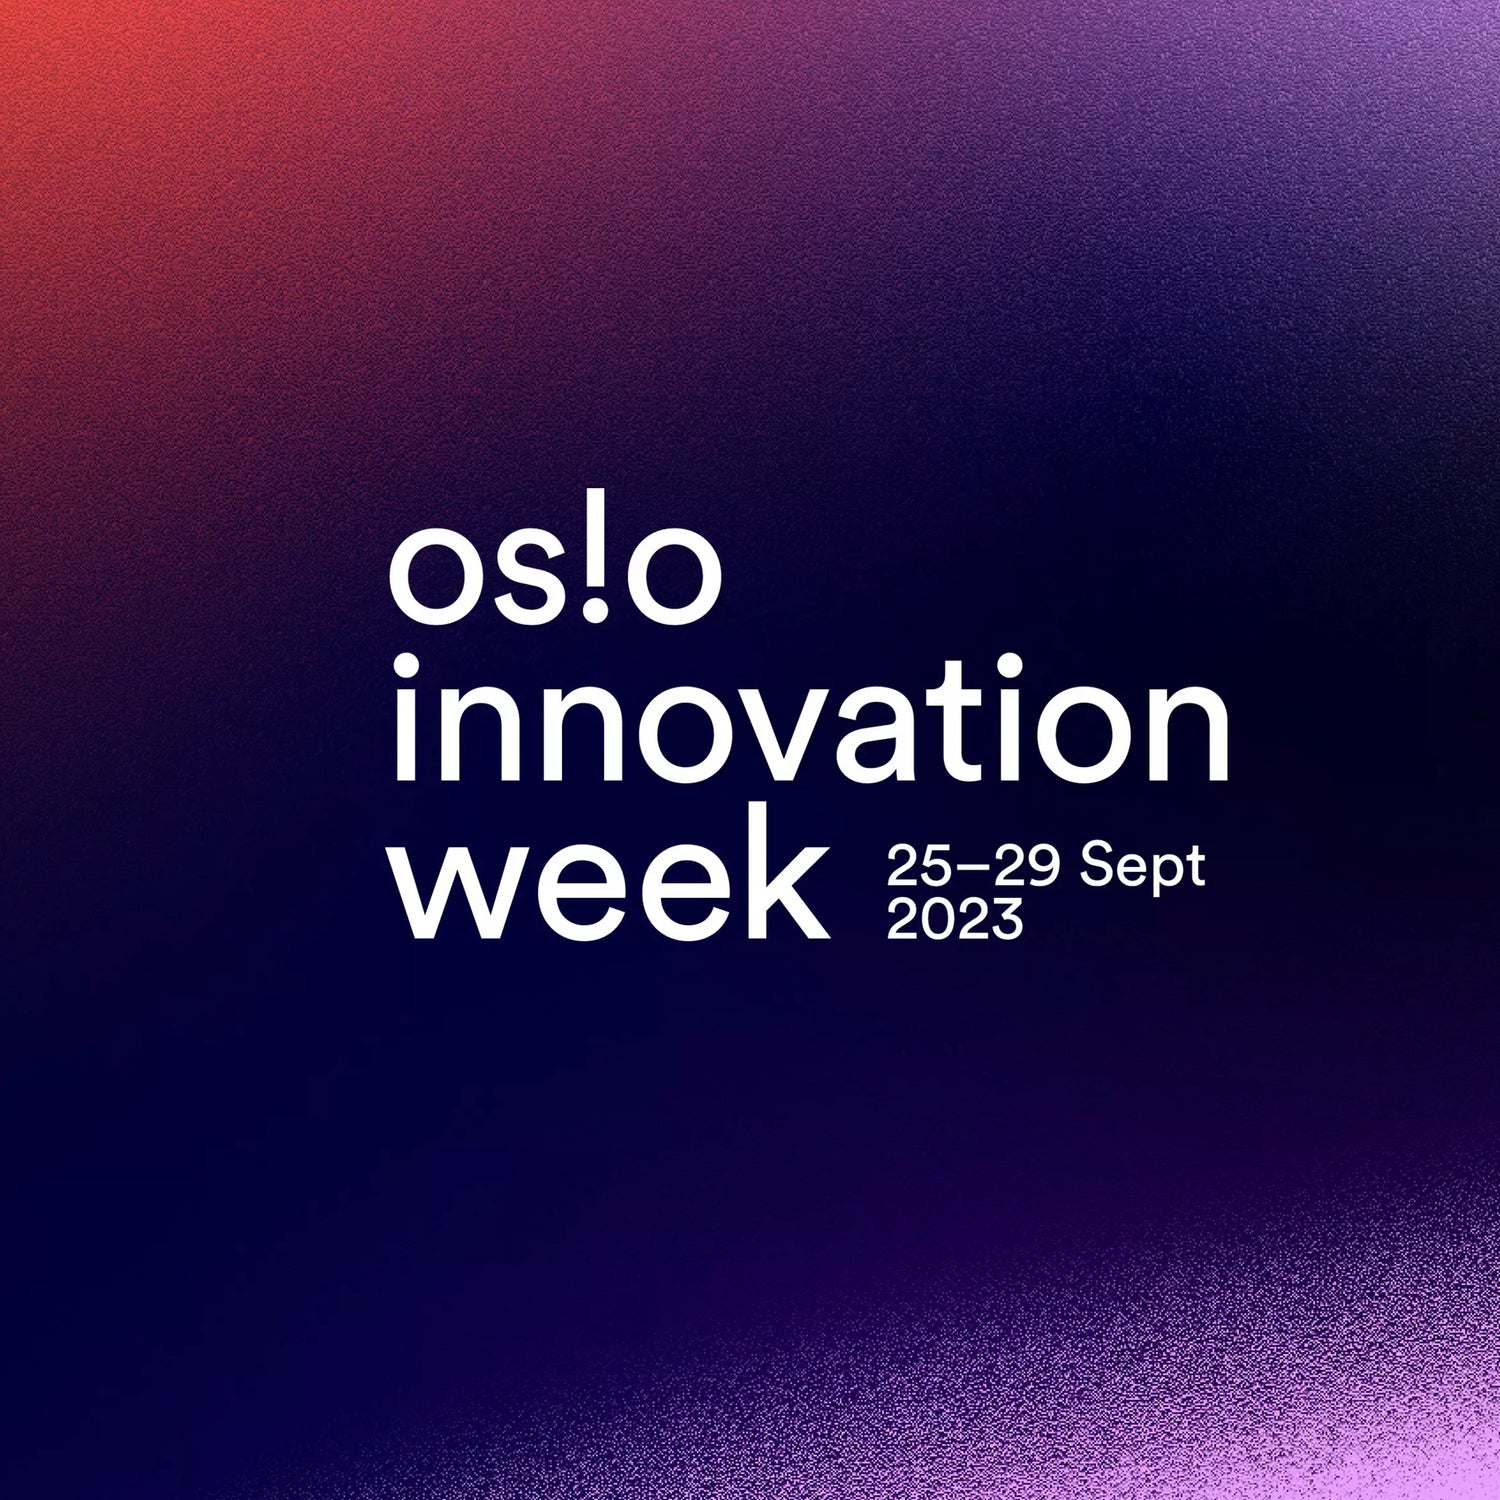 THE BEST OF OSLO WEEK 2023